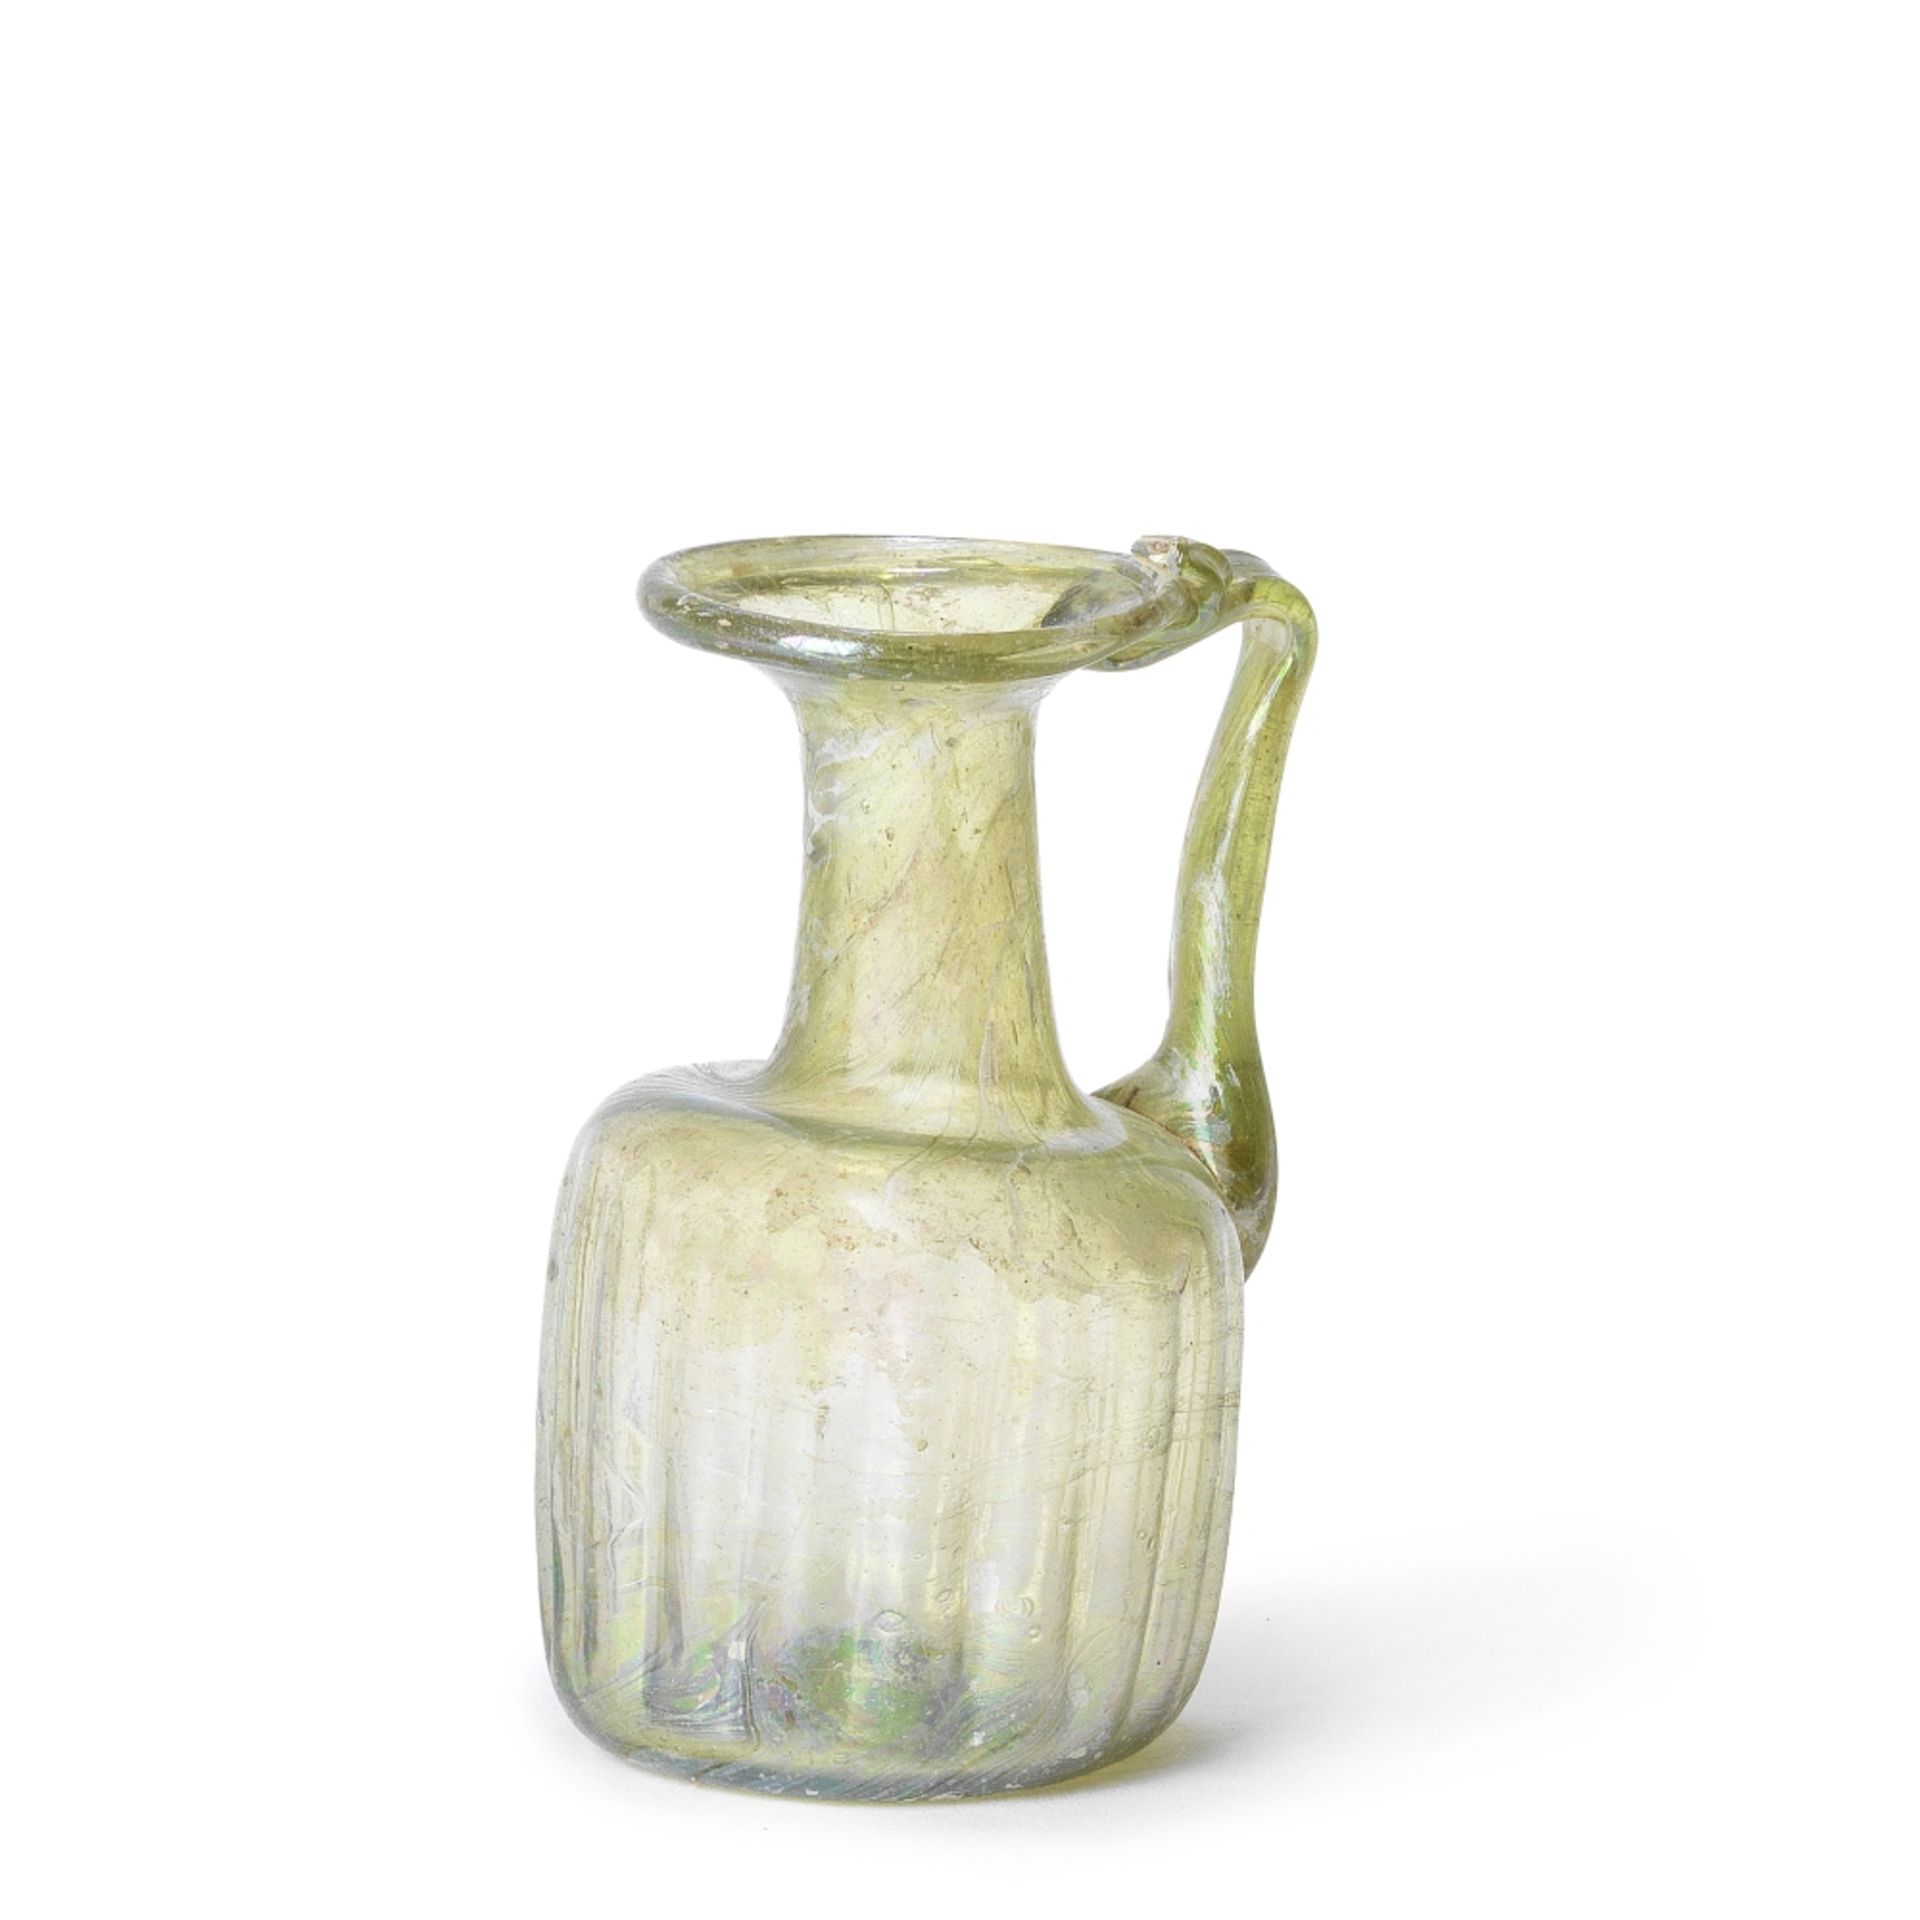 A Roman pale green glass juglet